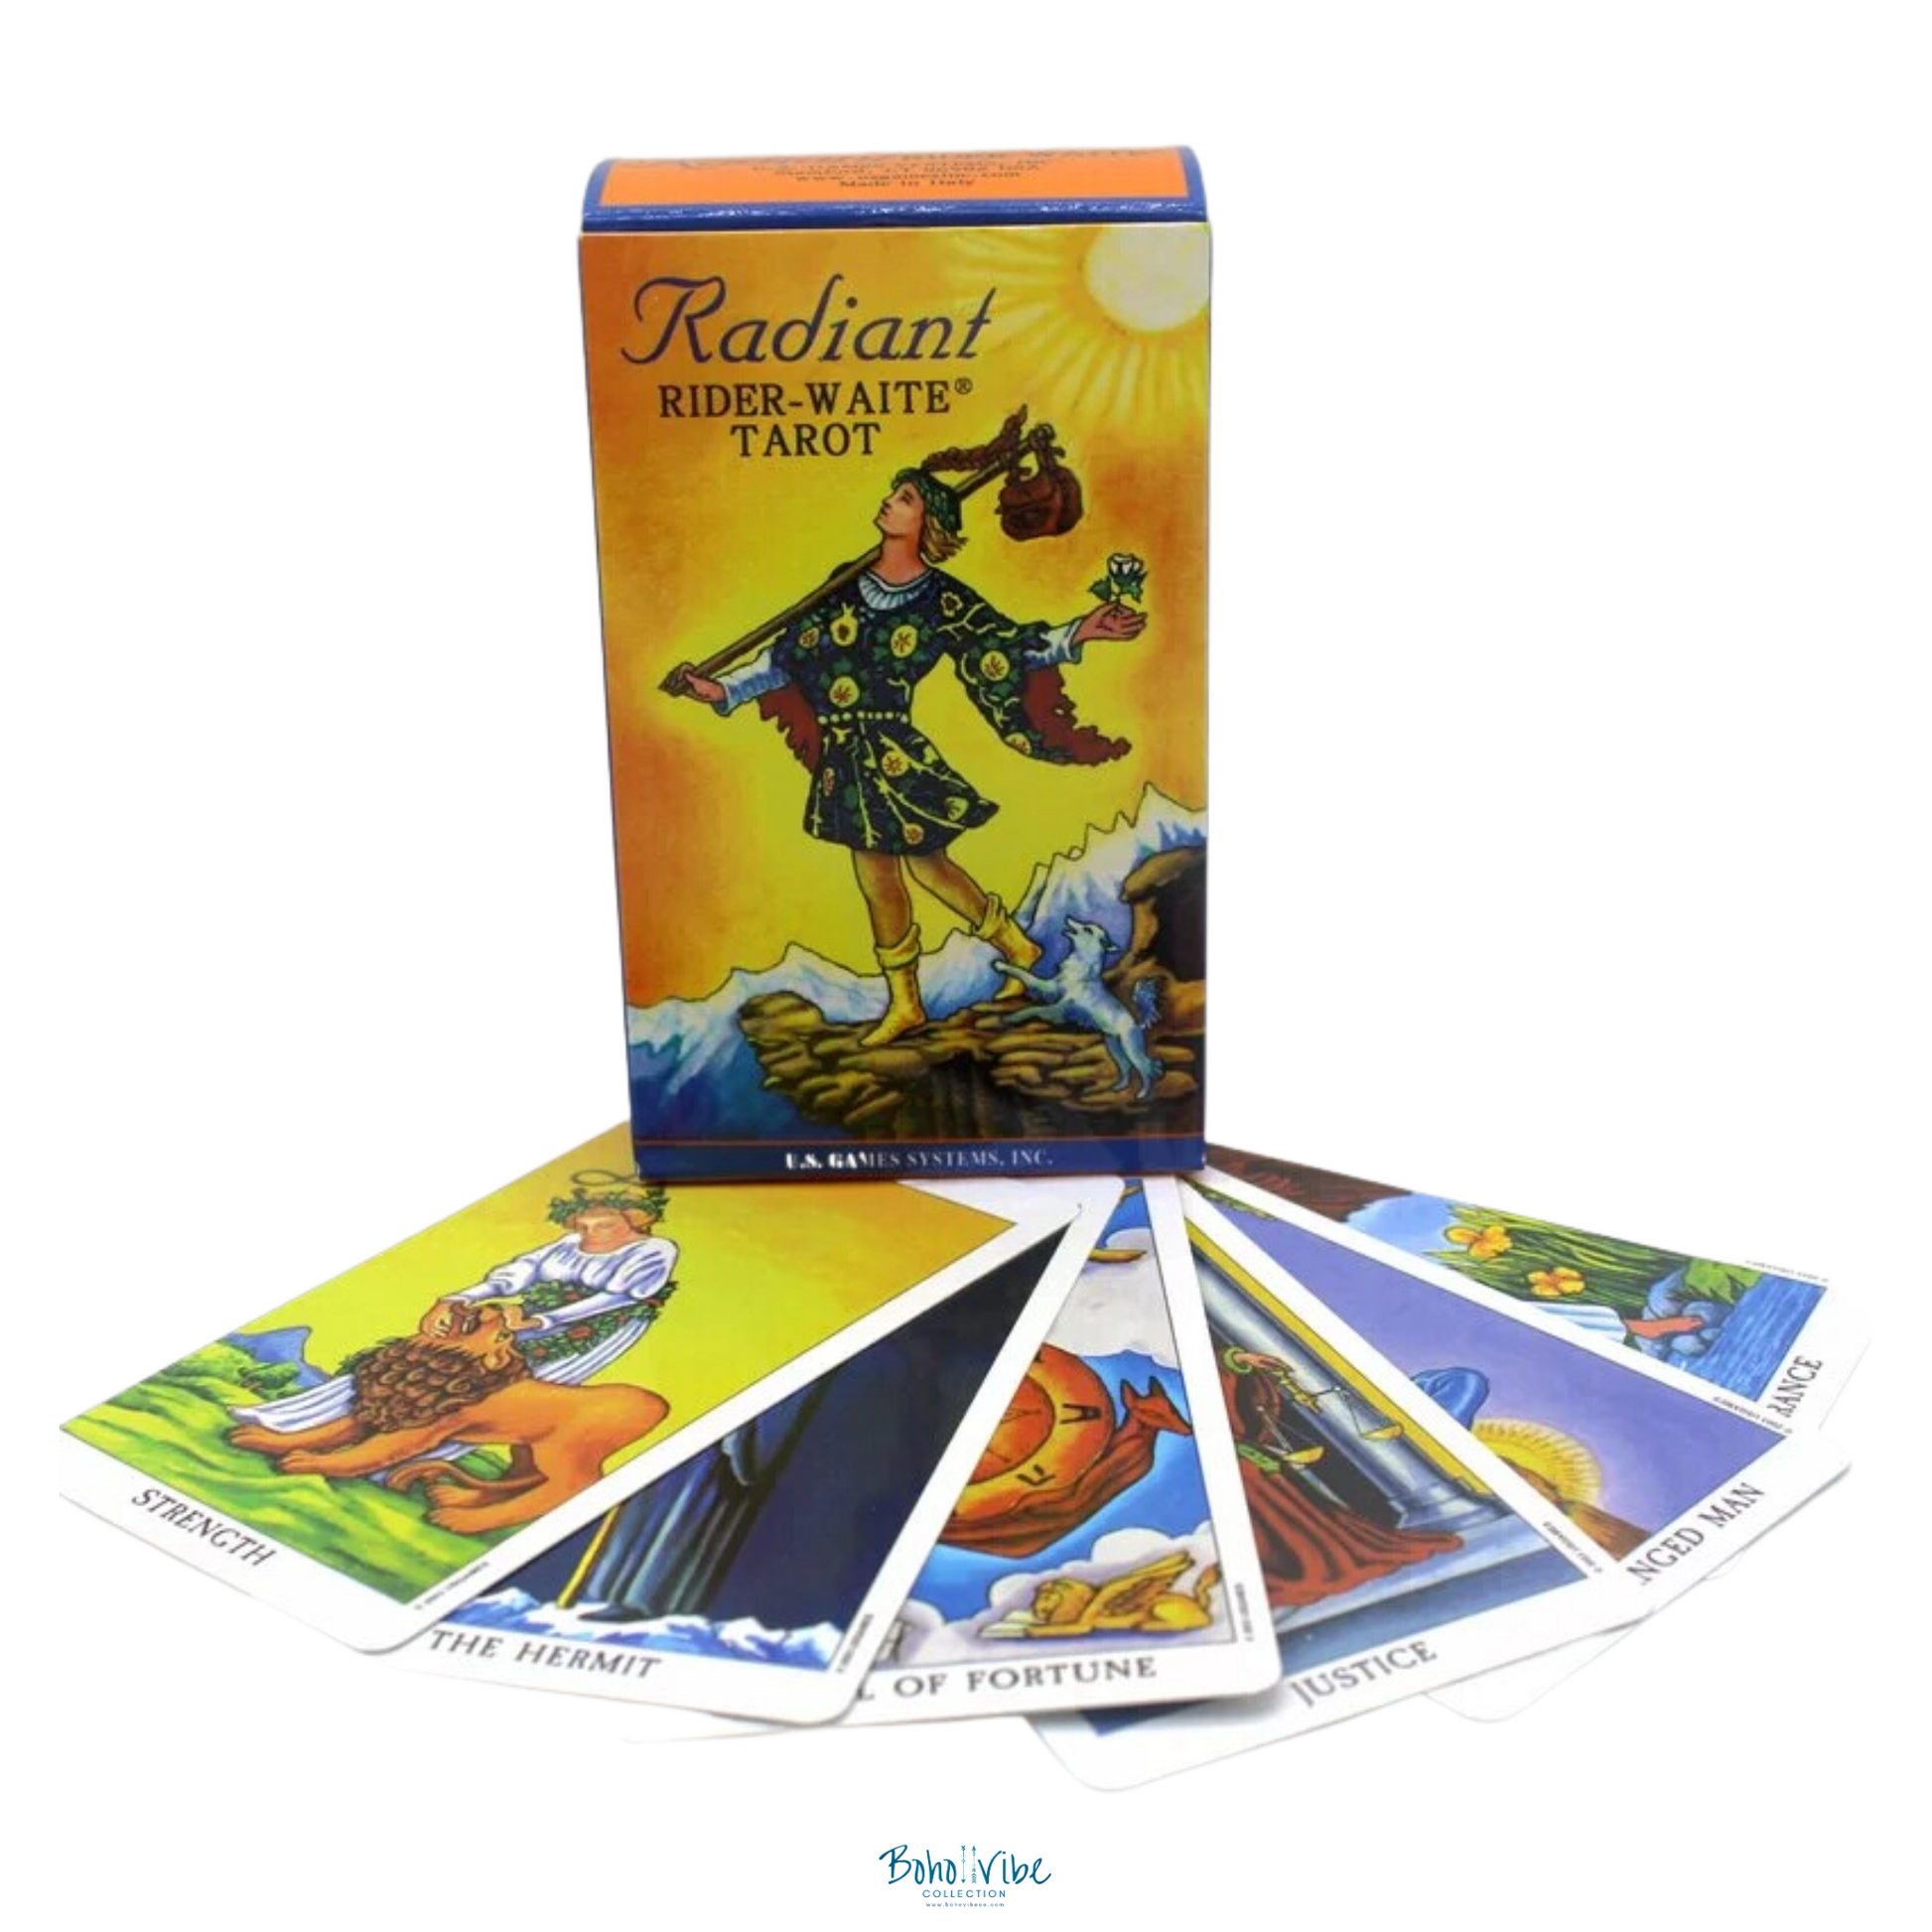 pust Bare overfyldt kom videre Radiant Rider-Waite Tarot Deck Classic Tarot Cards & Booklet